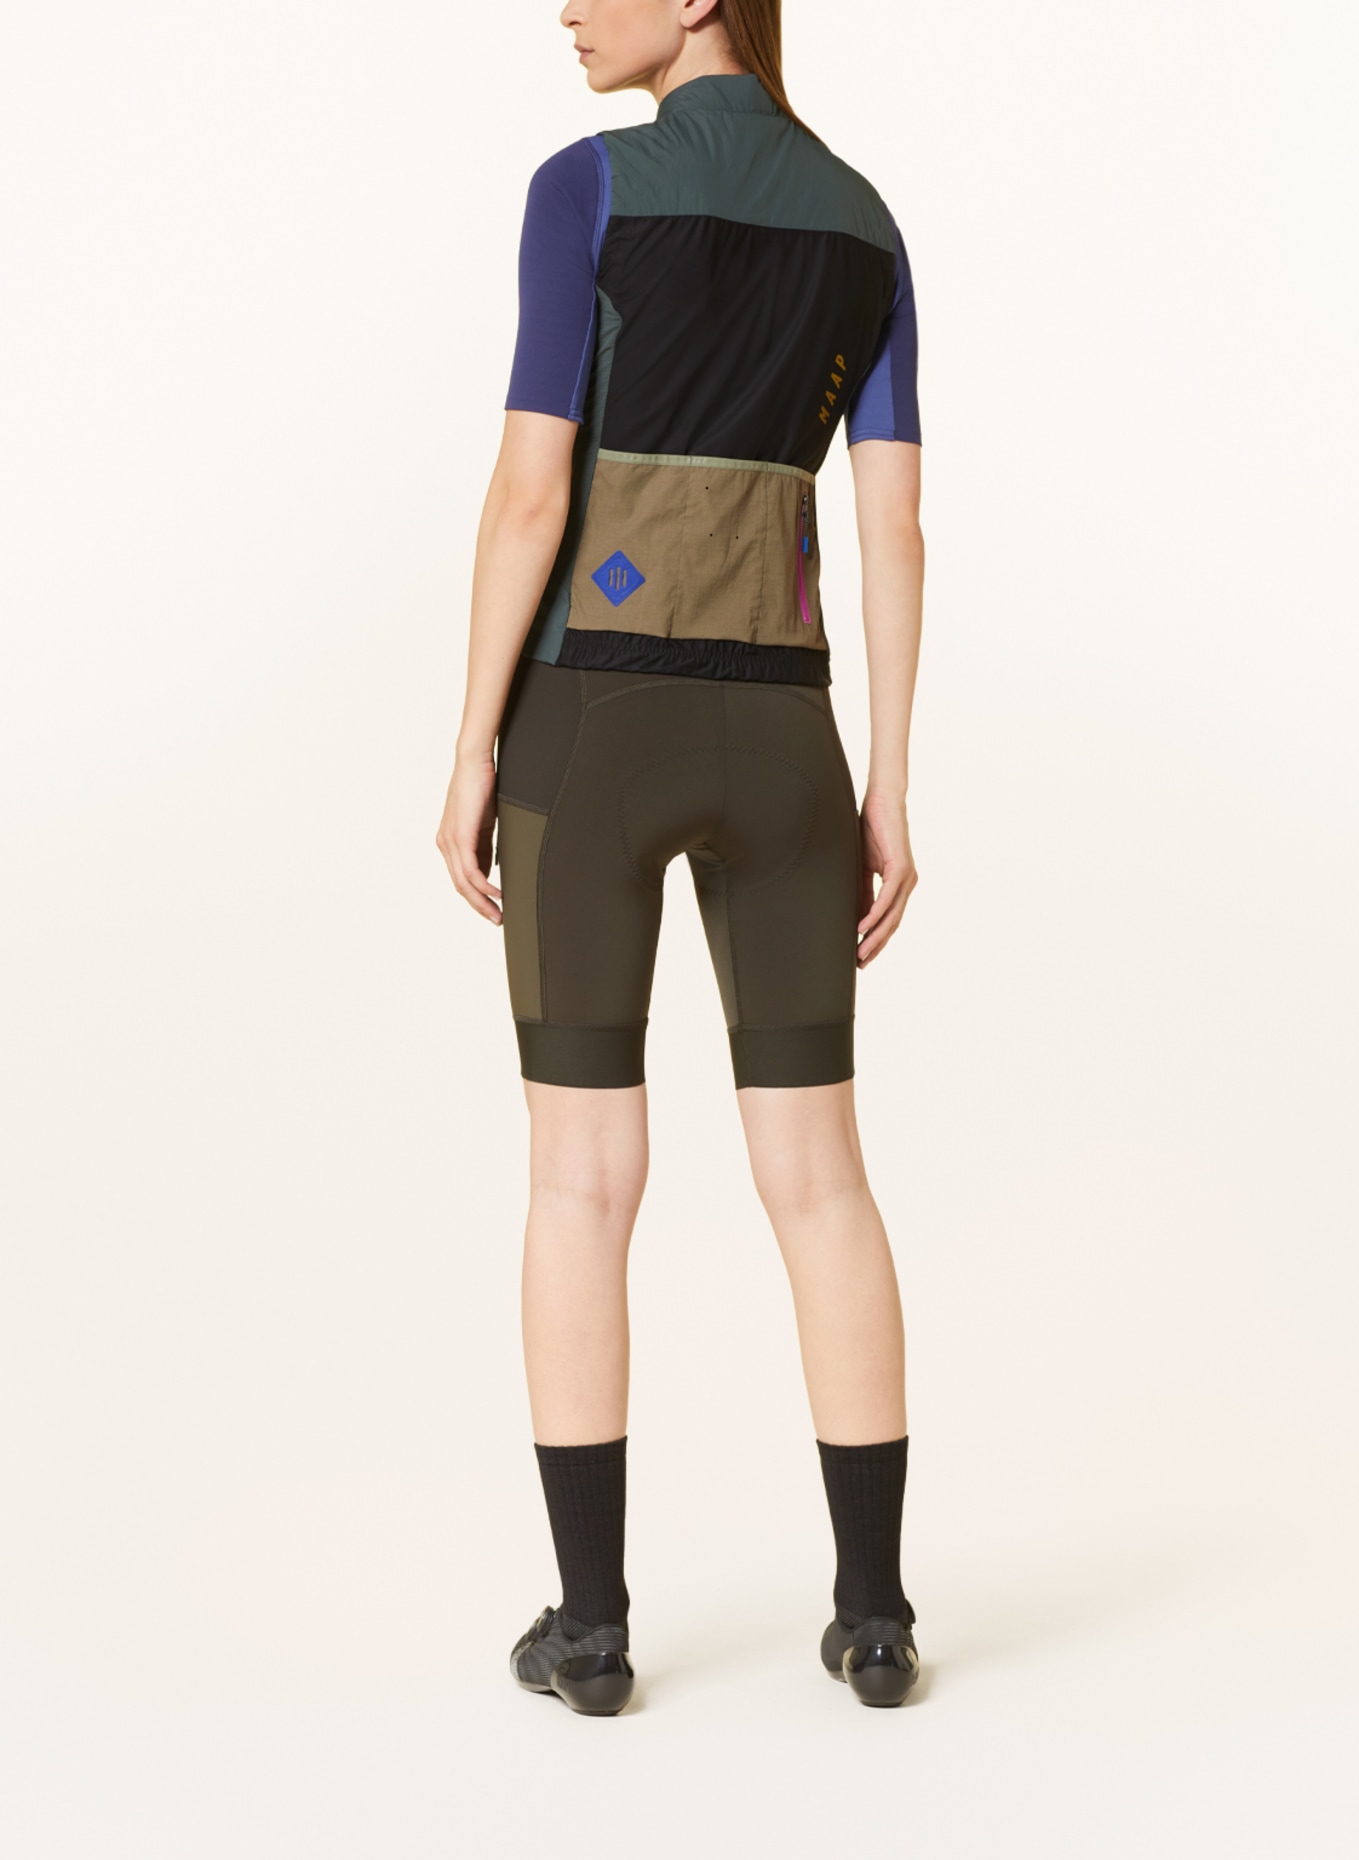 MAAP Cycling vest ALT_ROAD, Color: TEAL/ BLACK/ KHAKI (Image 3)